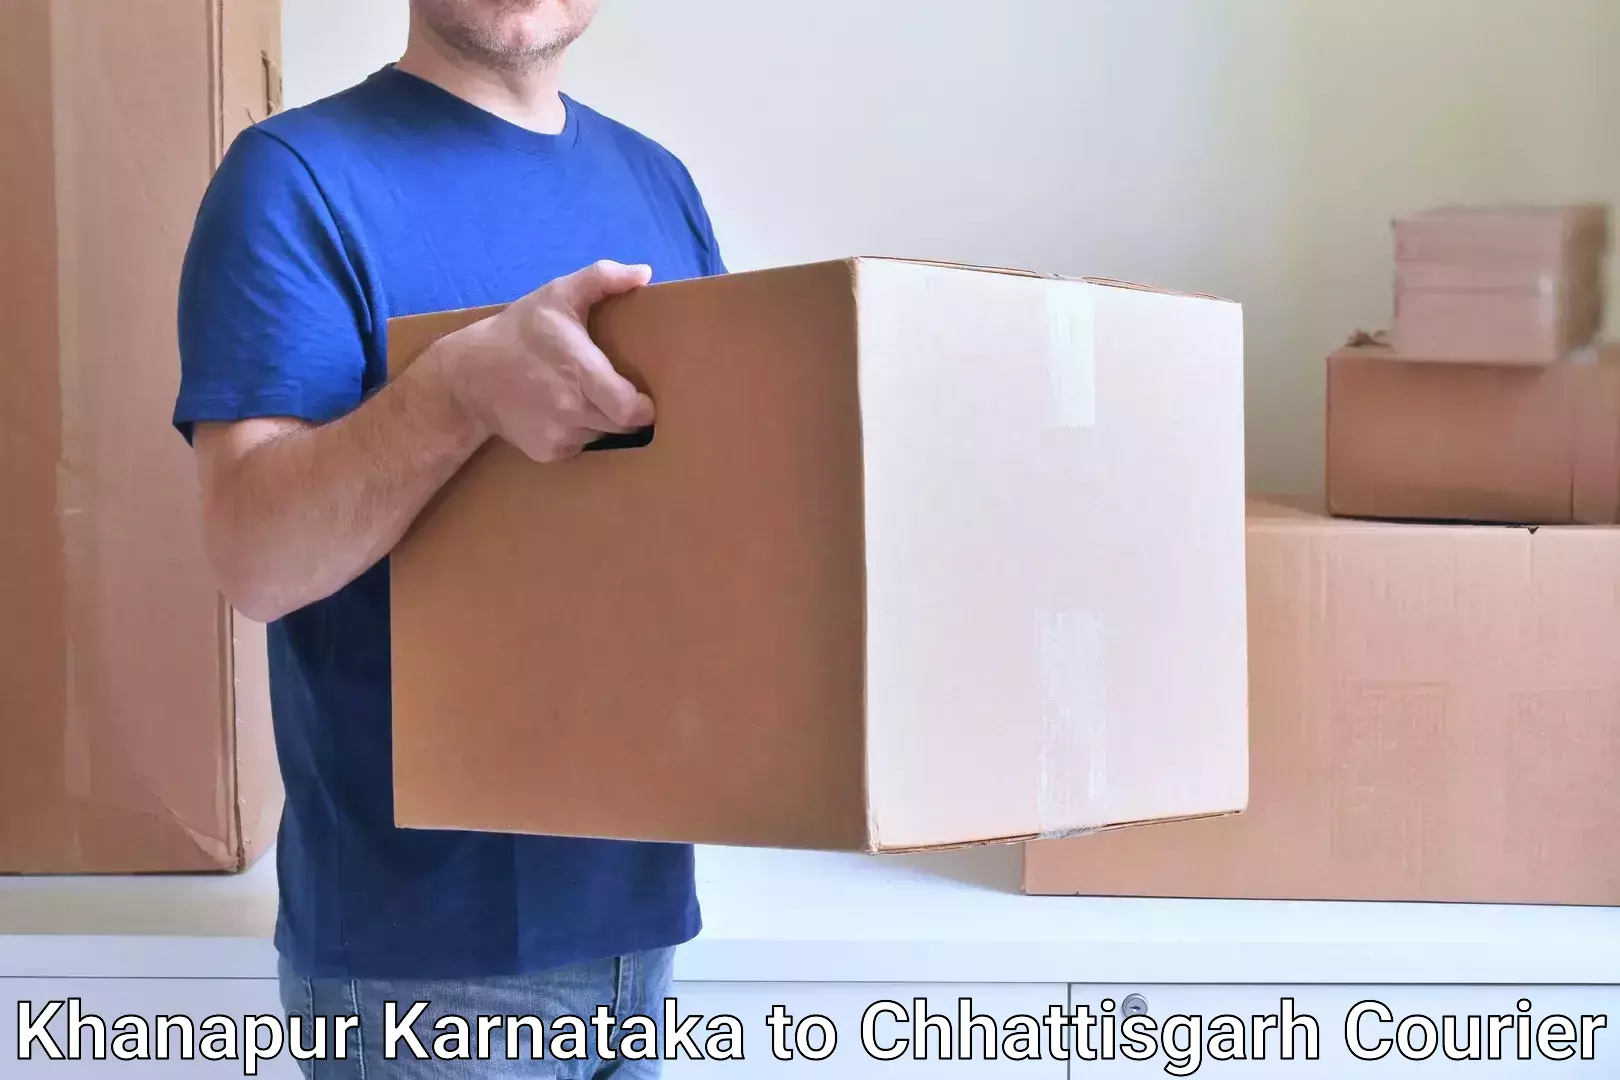 Flexible parcel services Khanapur Karnataka to bagbahra